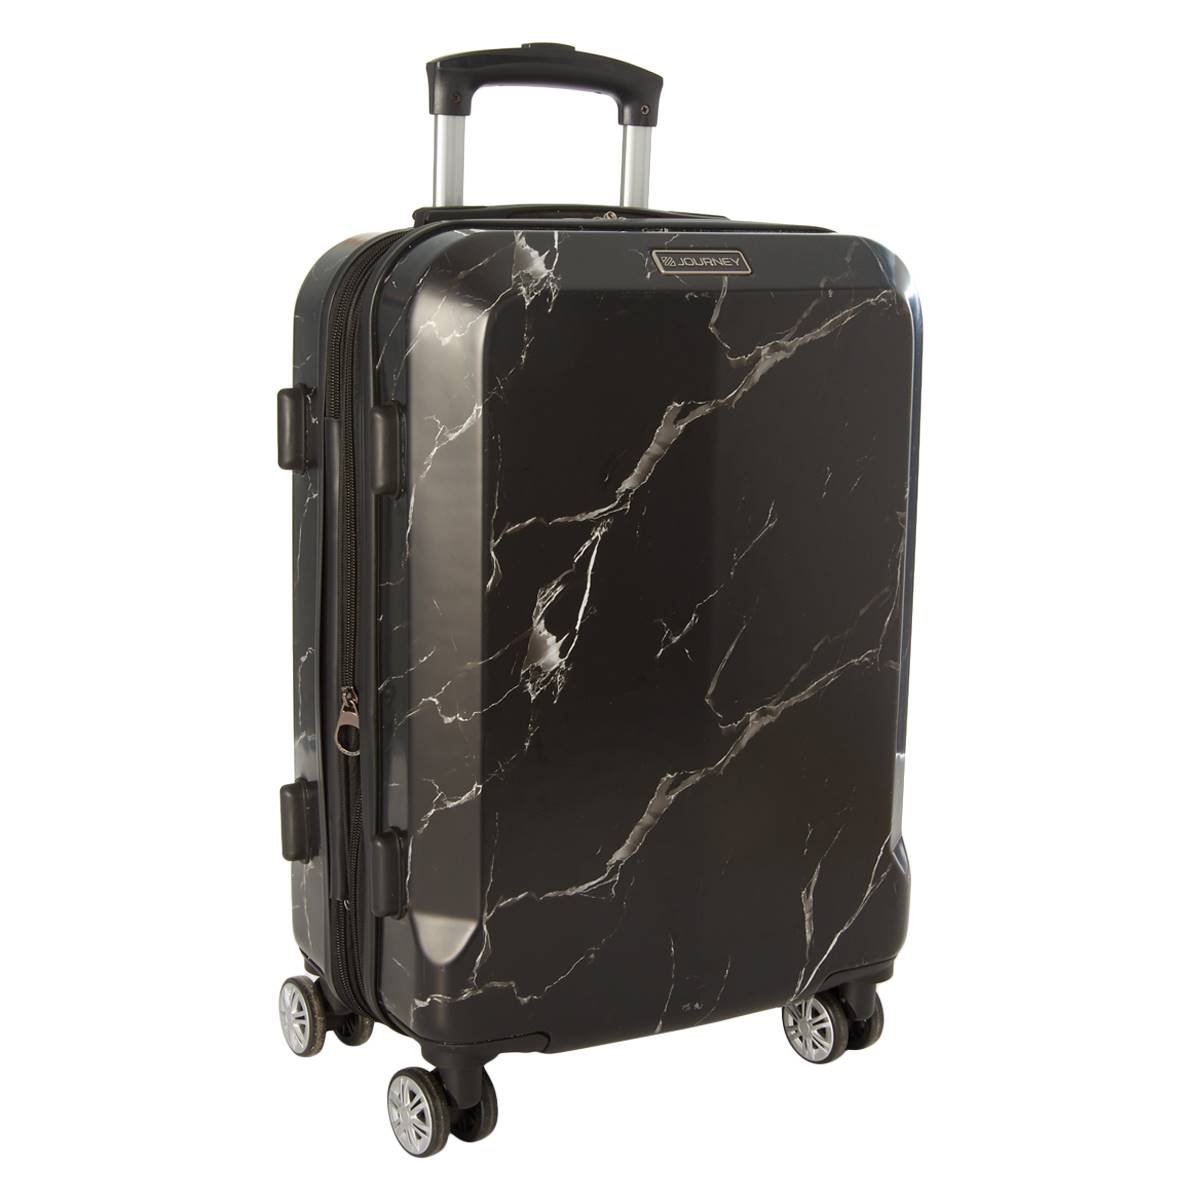 Journey 24in. Marble Hardside Spinner Luggage - Black